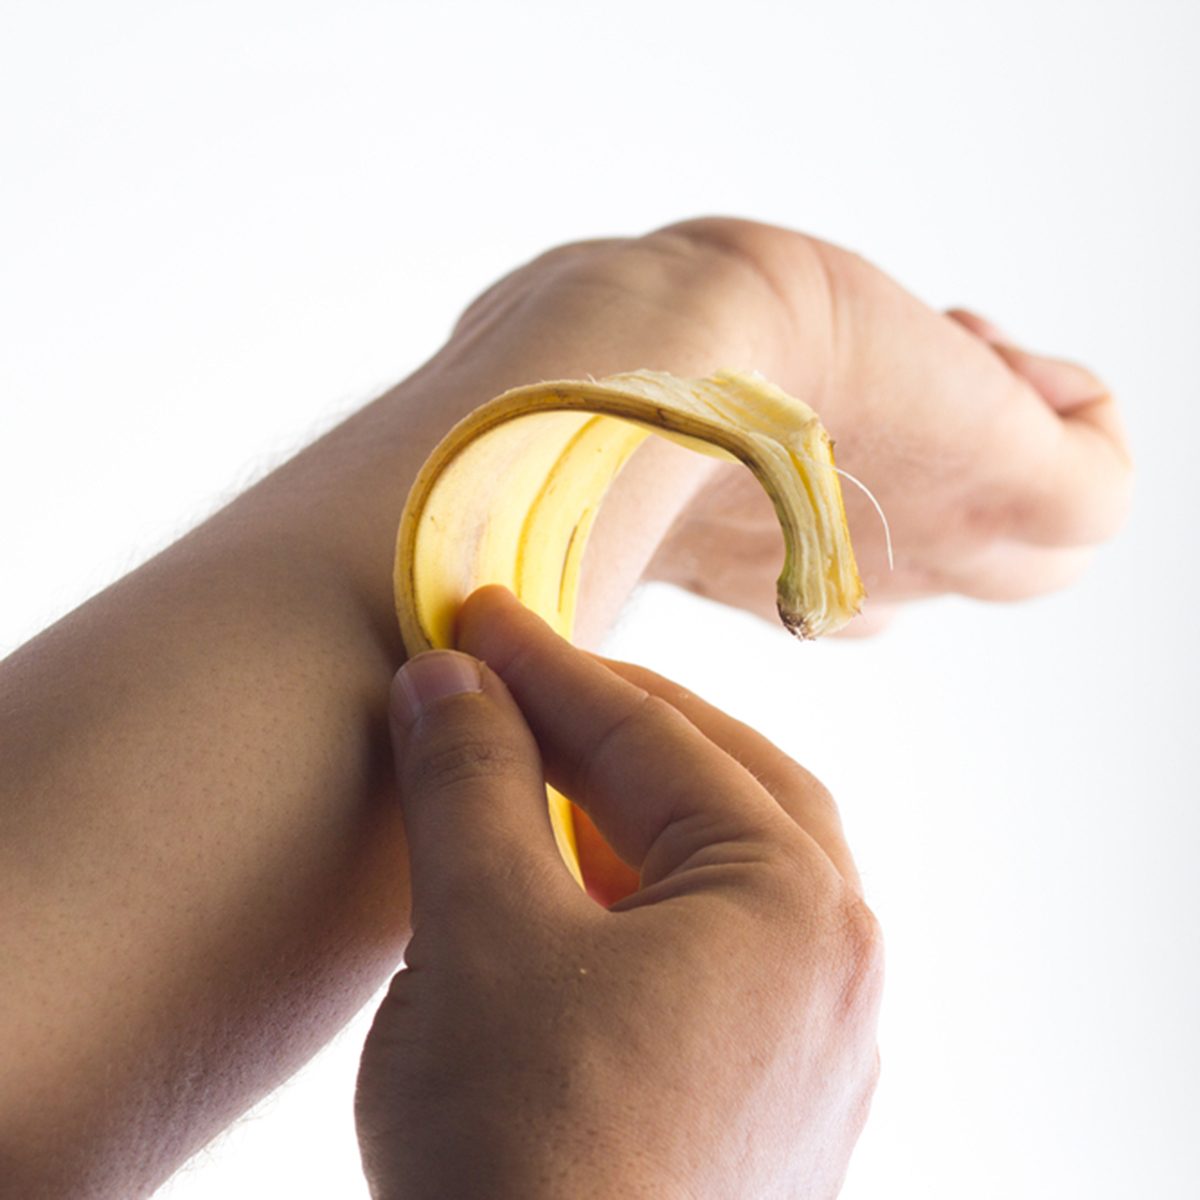 Using a banana peel on the skin